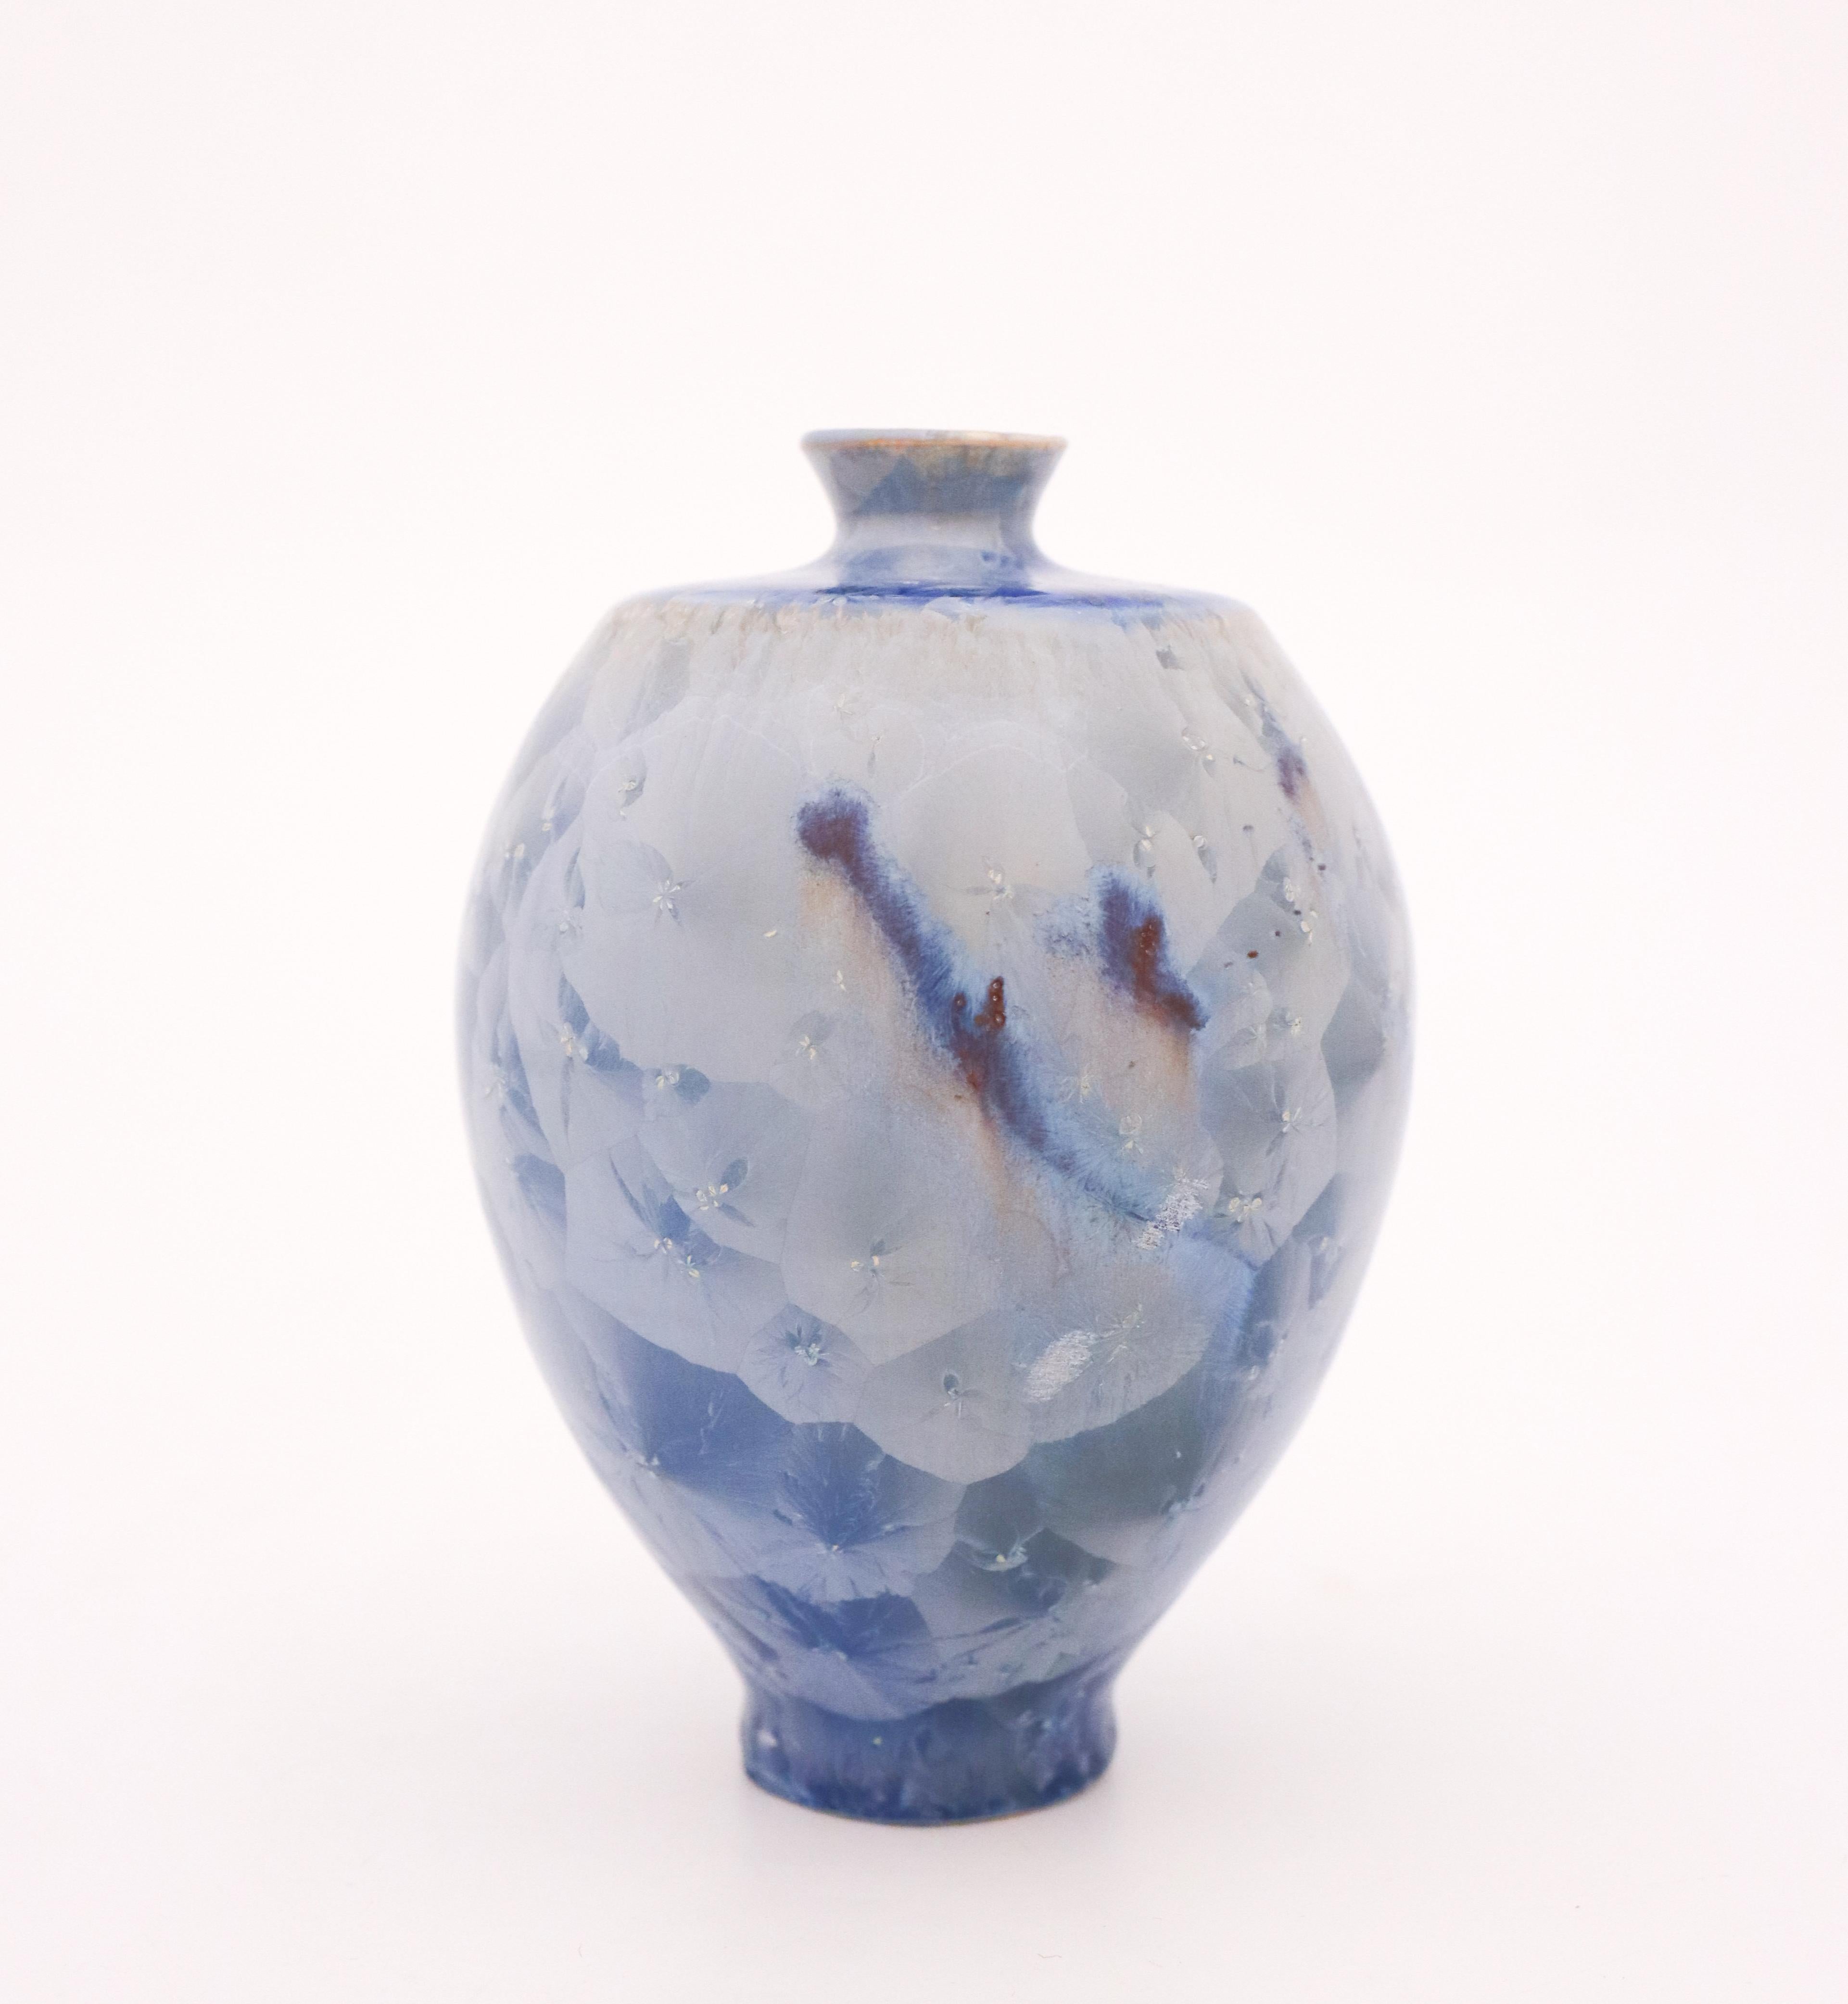 Scandinavian Modern Isak Isaksson Vase, Blue Crystalline Glaze, Contemporary Swedish Ceramicist